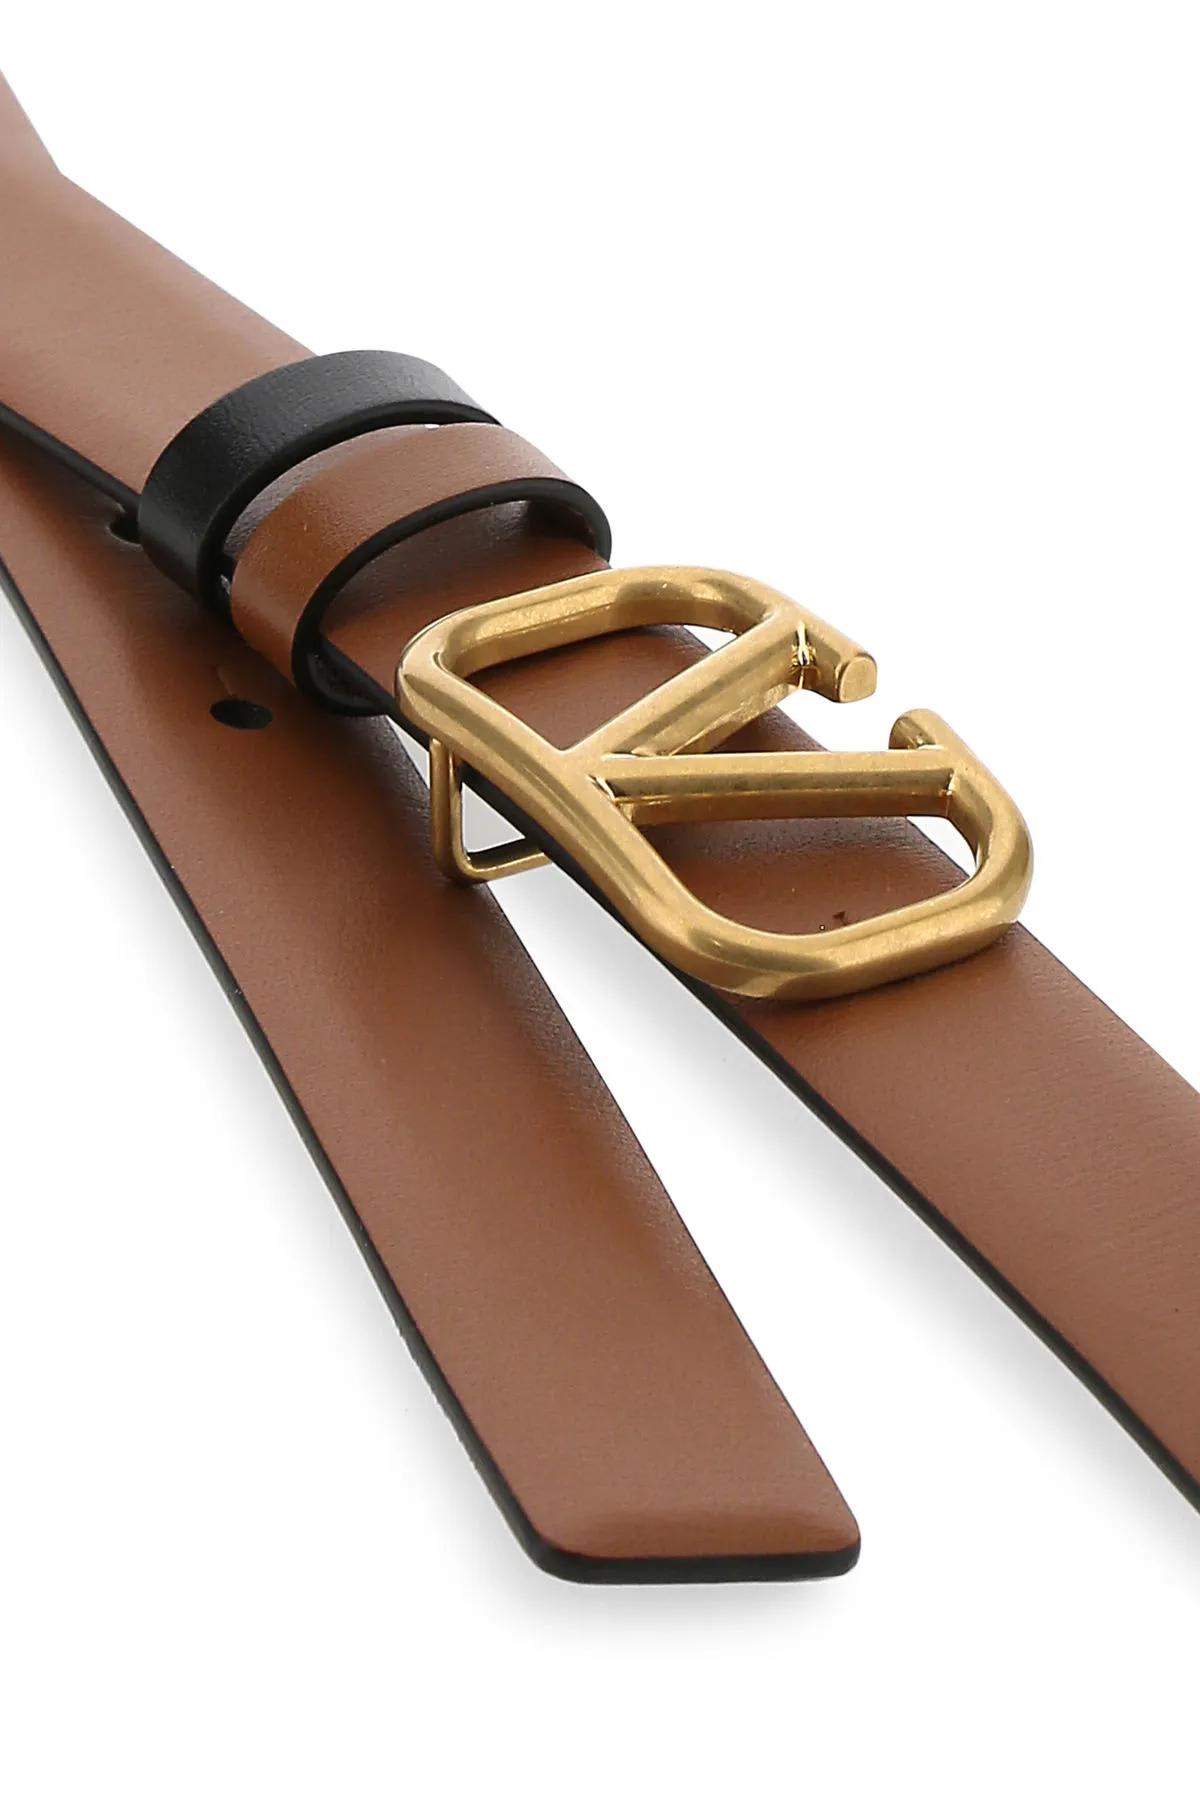 Valentino Garavani Vlogo Reversible Leather Belt, Nero / Rouge, Women's, 30in / 75cm, Belts Leather Belts